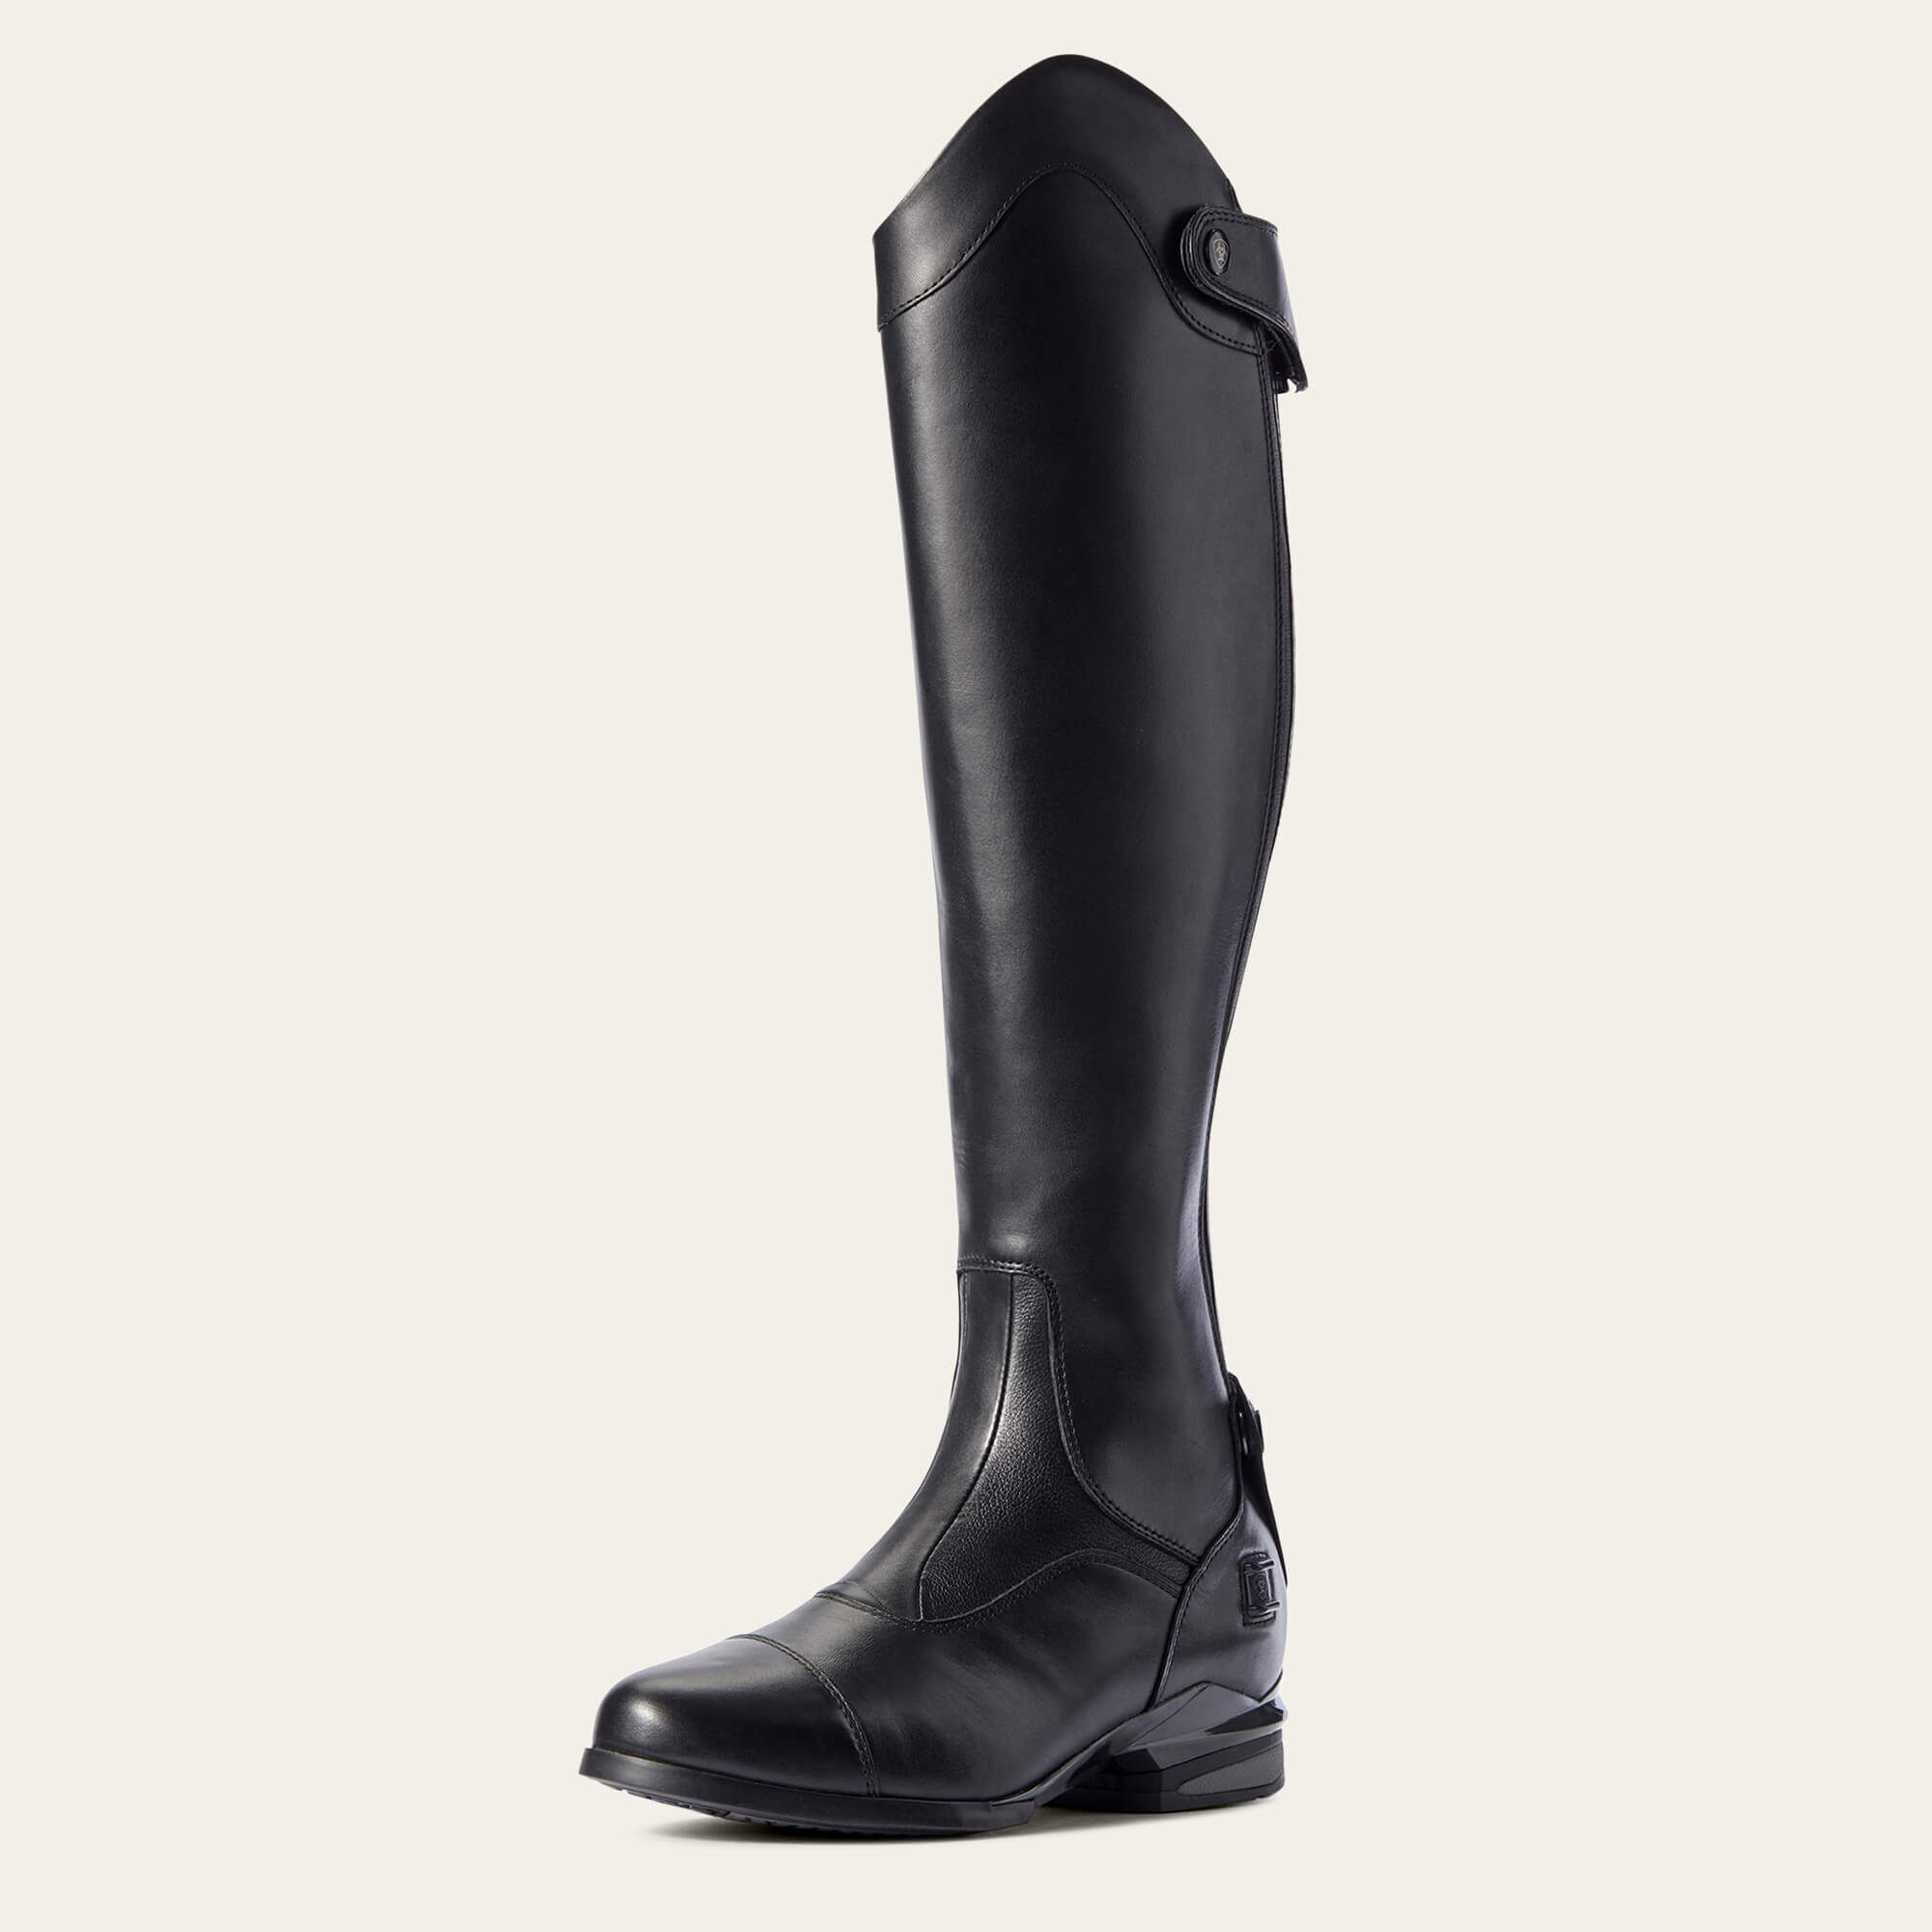 Women's Nitro Max Tall Riding Boots in Black, Size: 5.5 B / Medium Regular  by Ariat